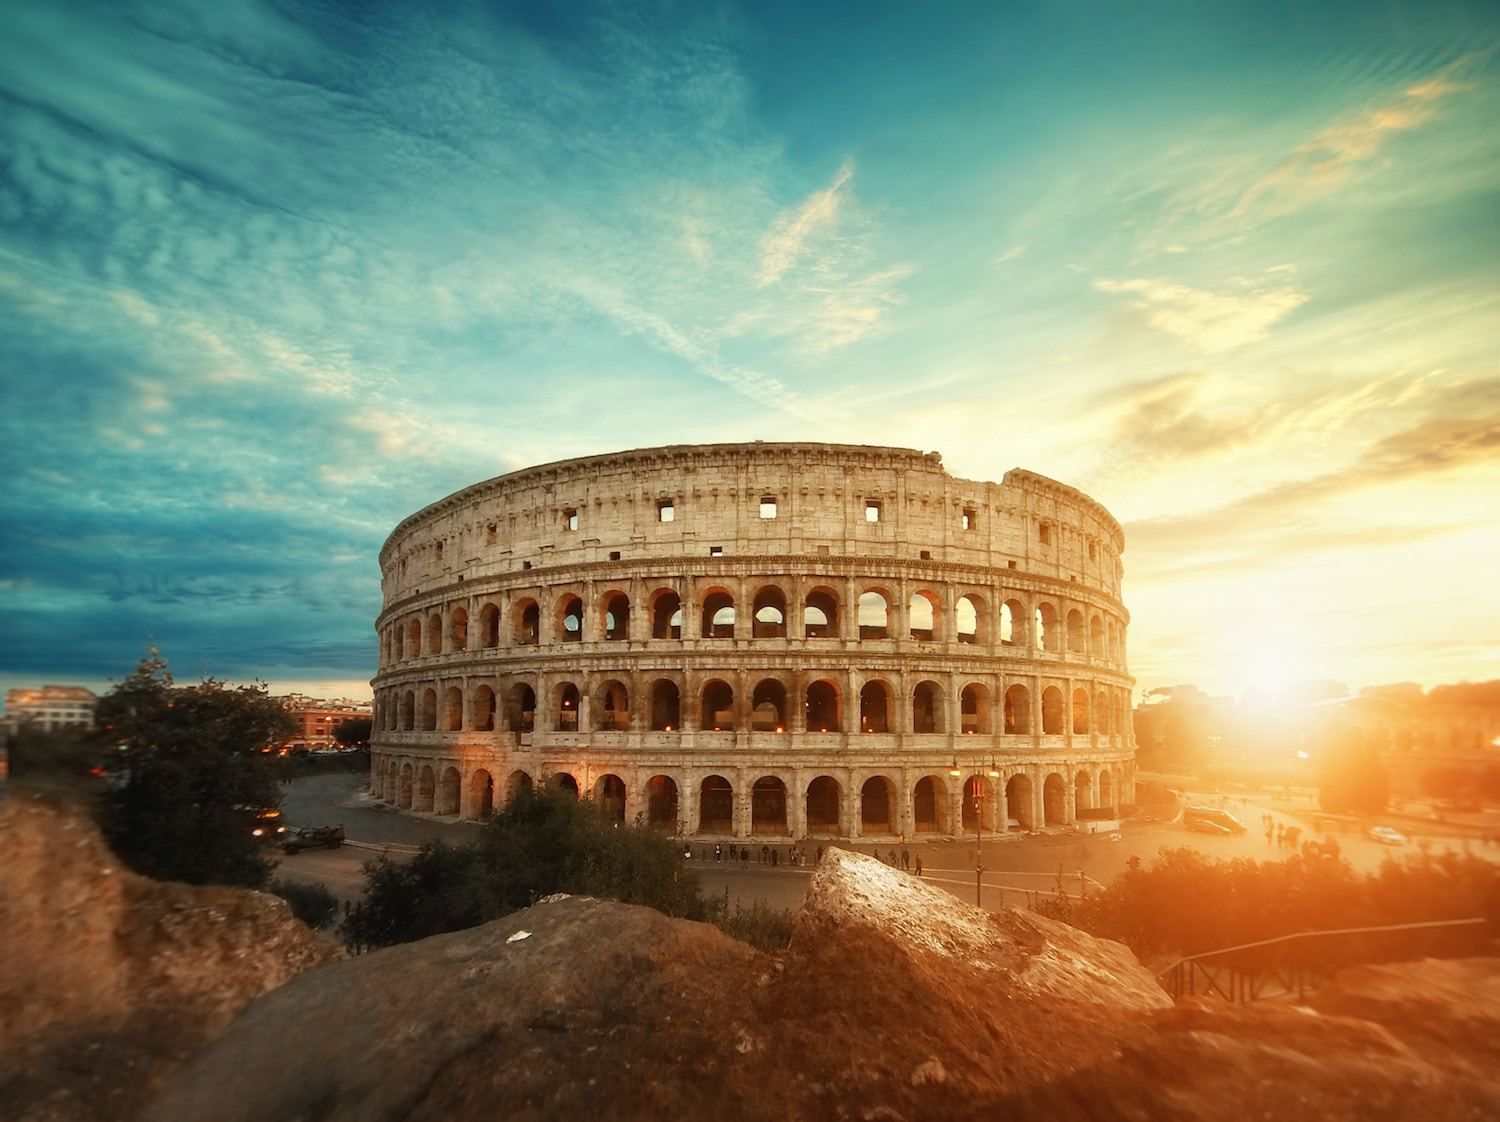 The Colloseum Rome Italy